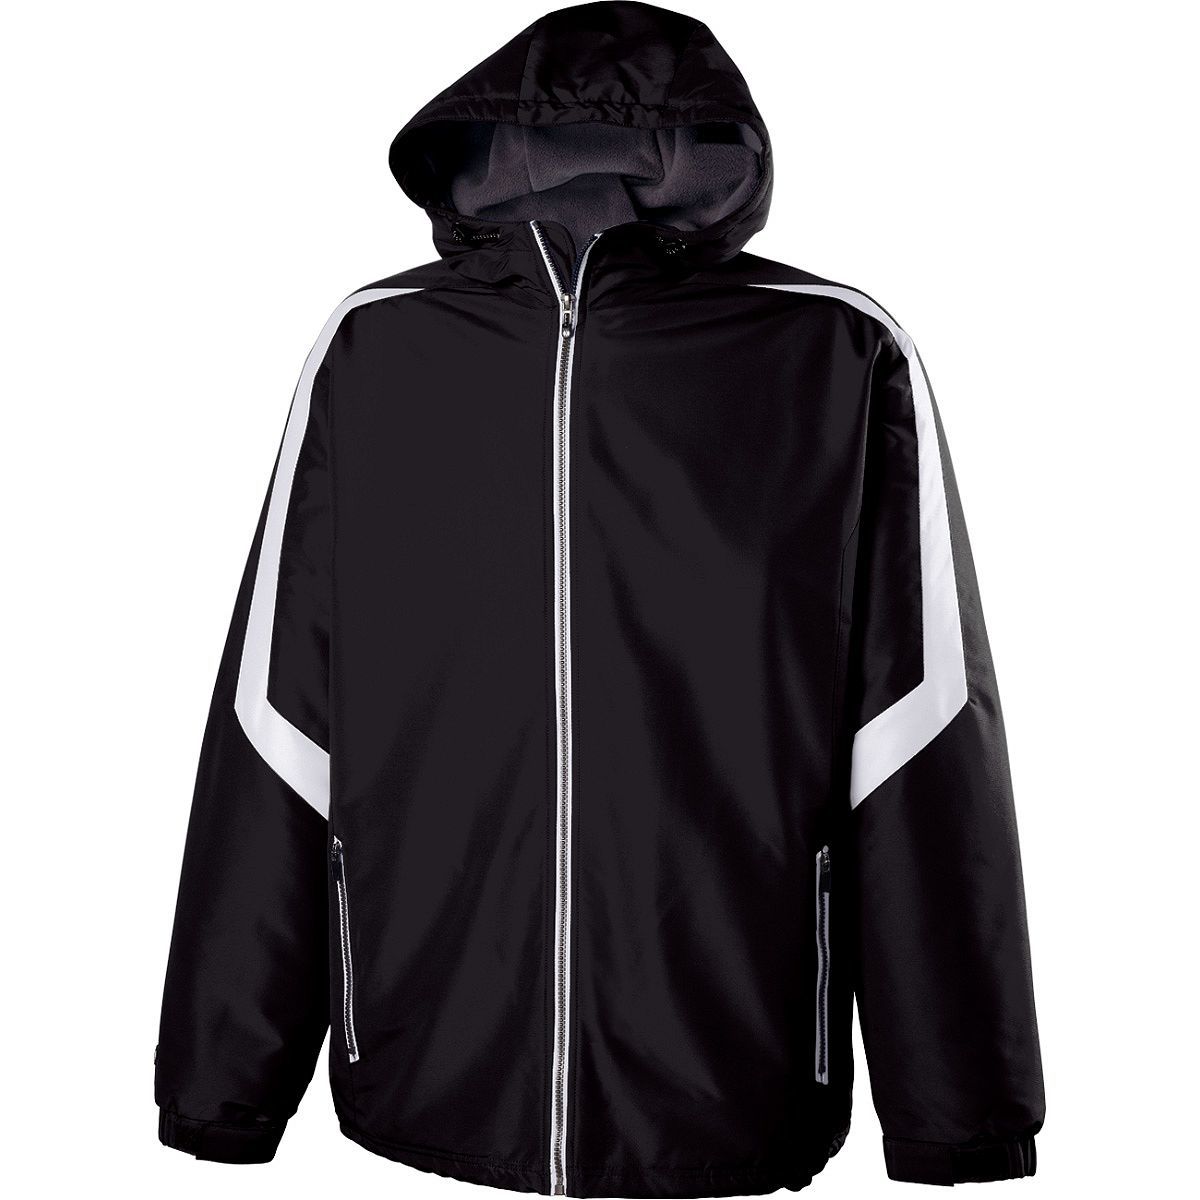 Holloway Sportswear M Charger Jacket Black/White 229059 - image 1 of 4